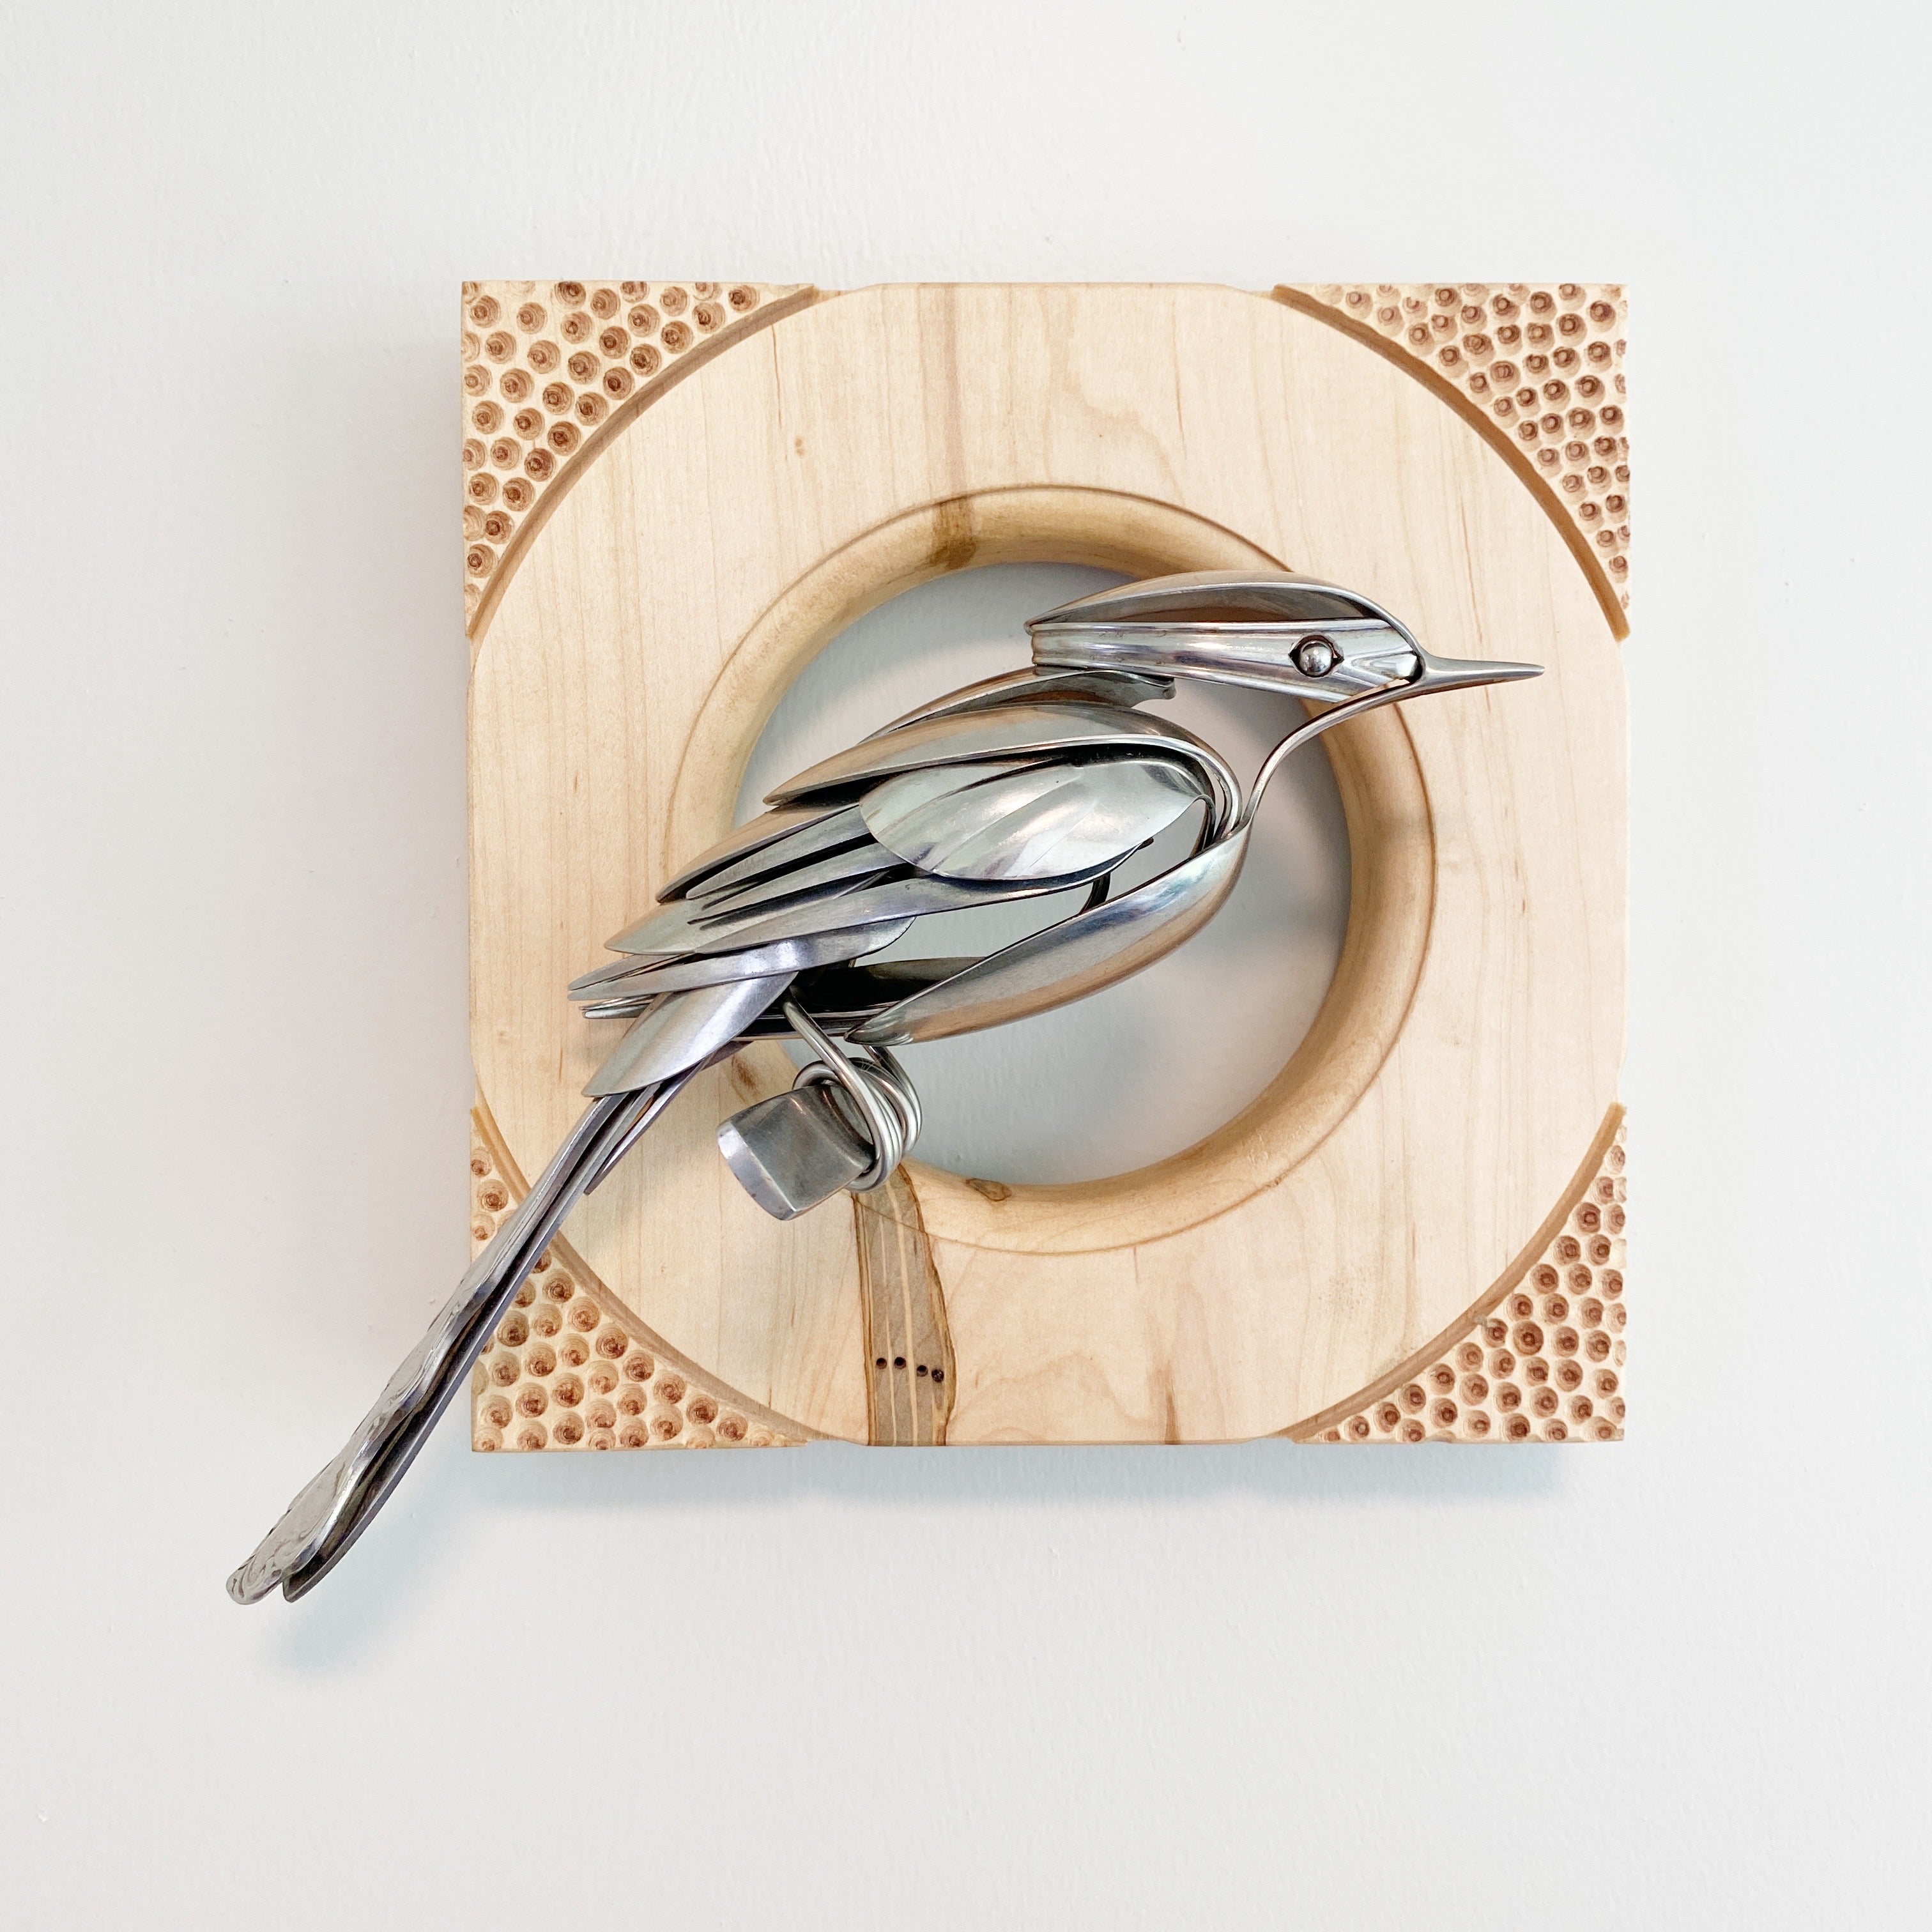 "Elliott" - Upcycled Metal Bird Sculpture